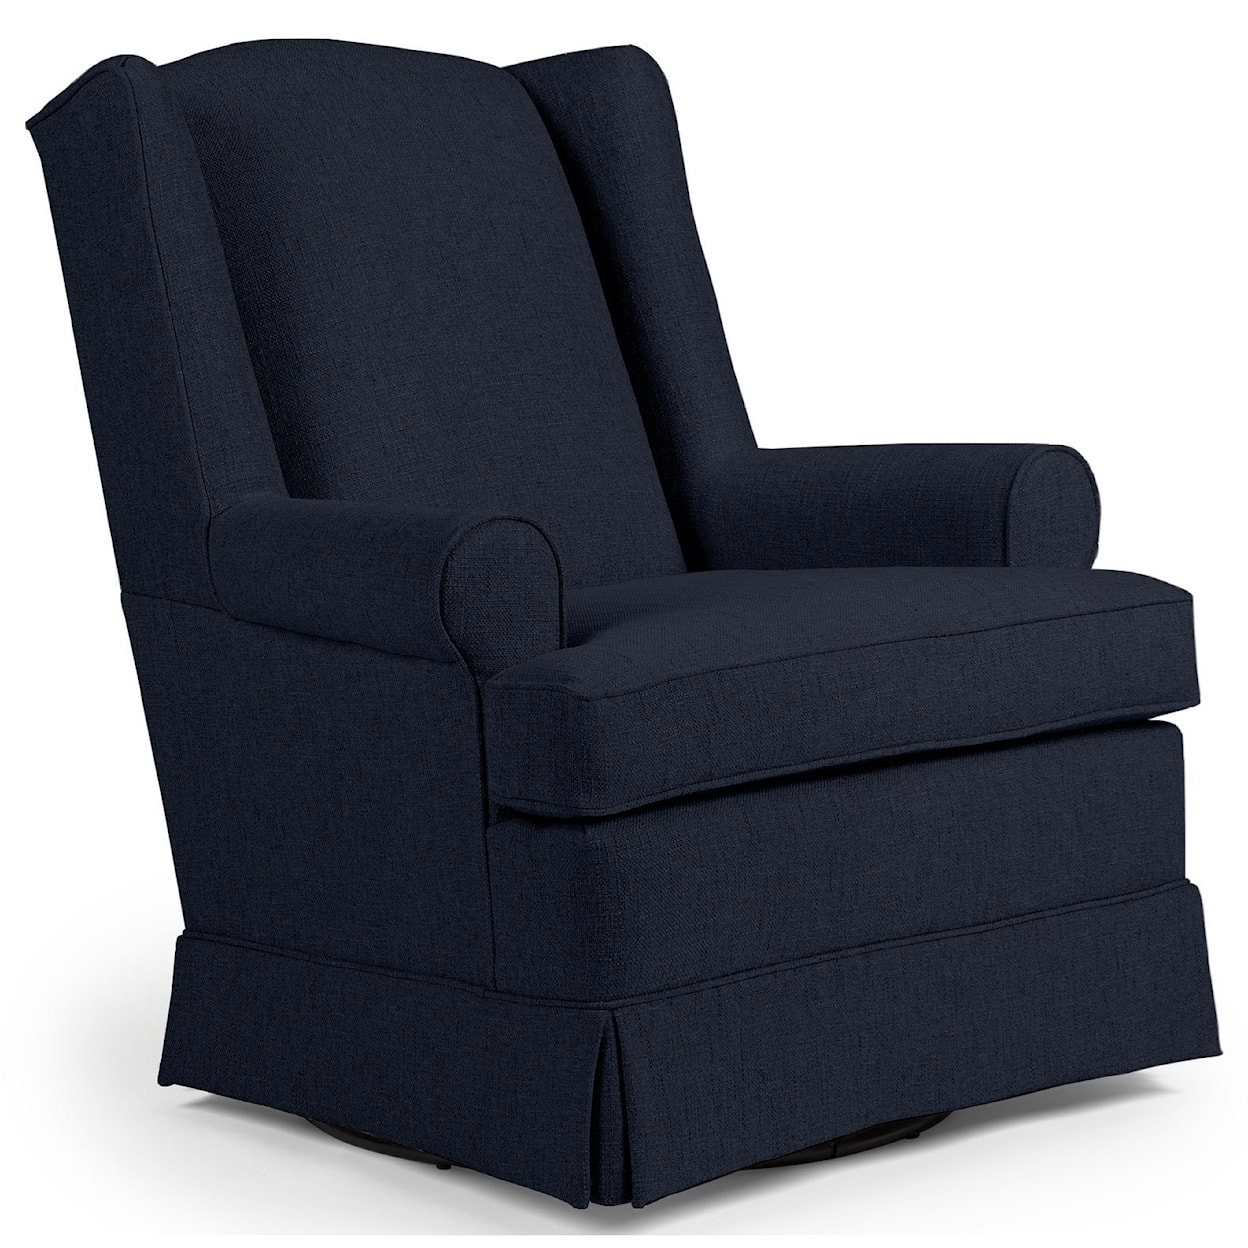 Bravo Furniture Roni Roni Swivel Glider Chair